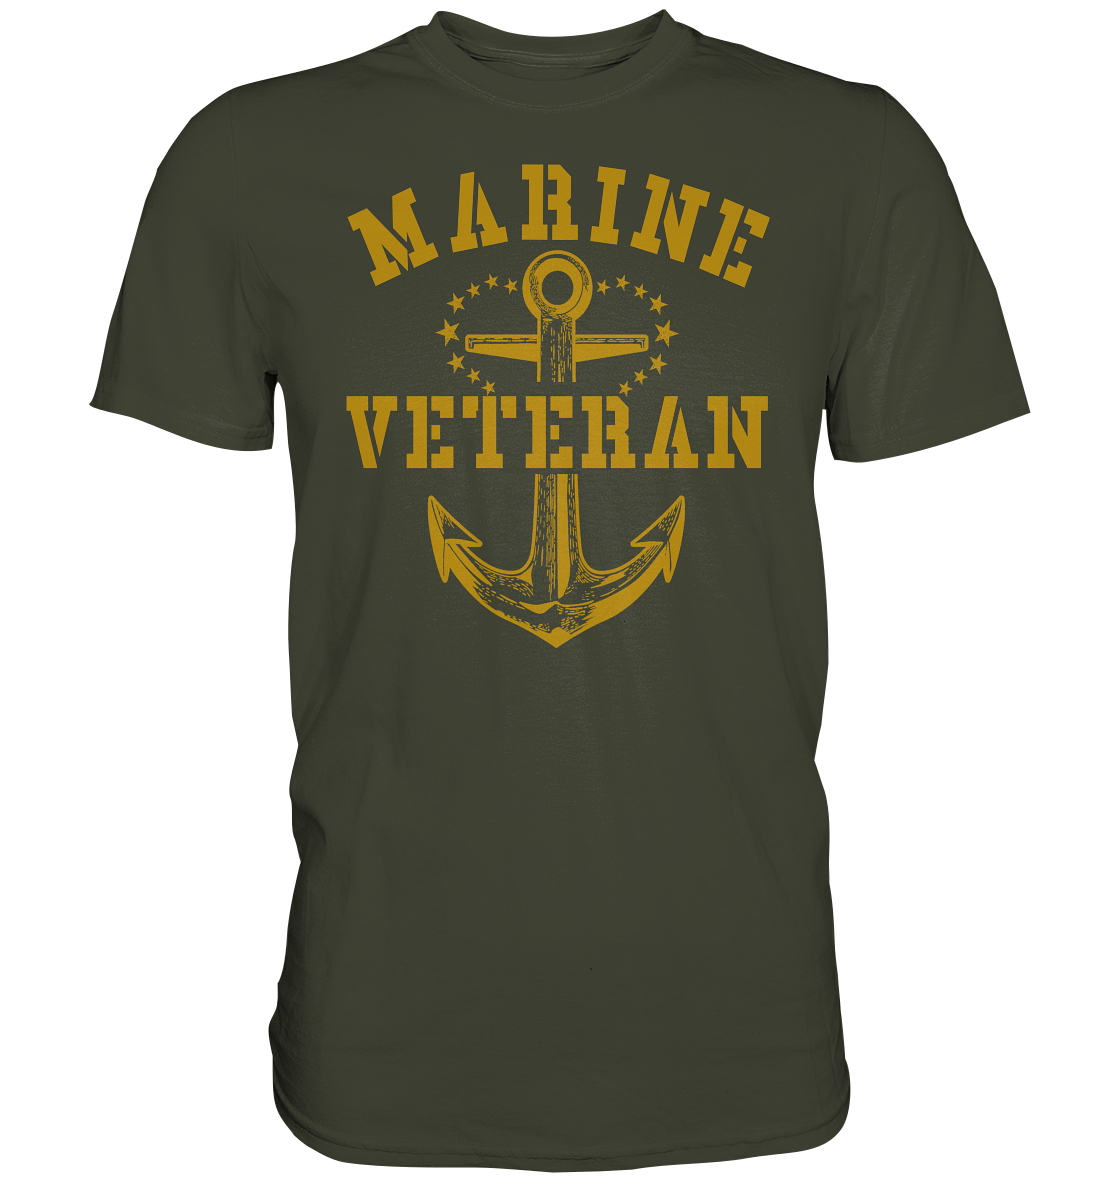 Anker Marine Veteran - Premium Shirt